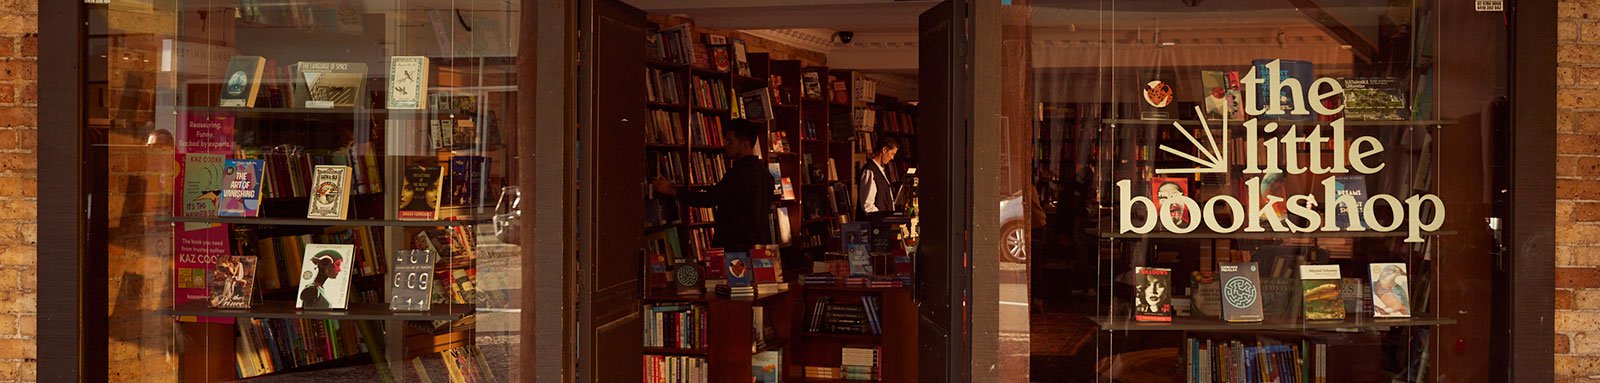 the little bookshop store front